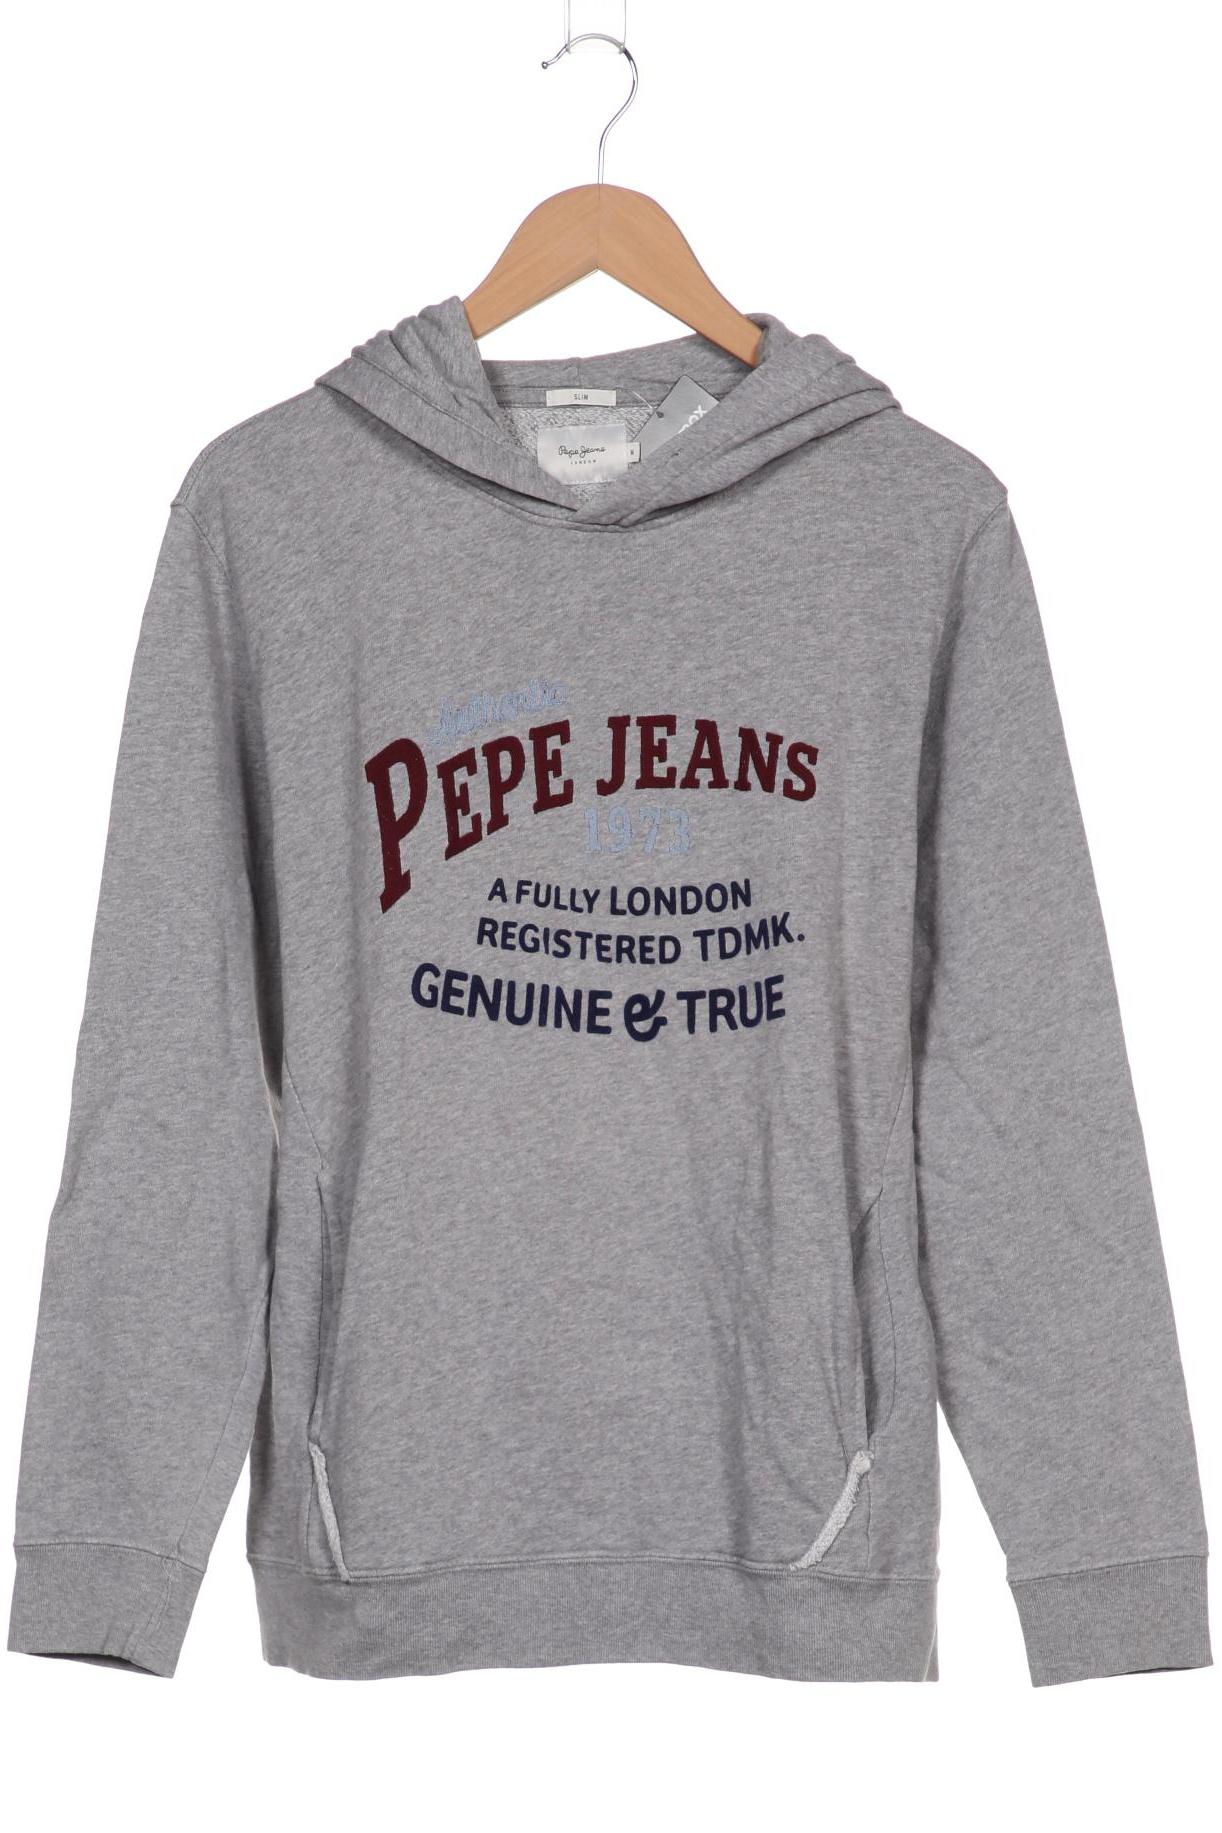 Pepe Jeans Herren Kapuzenpullover, grau, Gr. 48 von Pepe Jeans